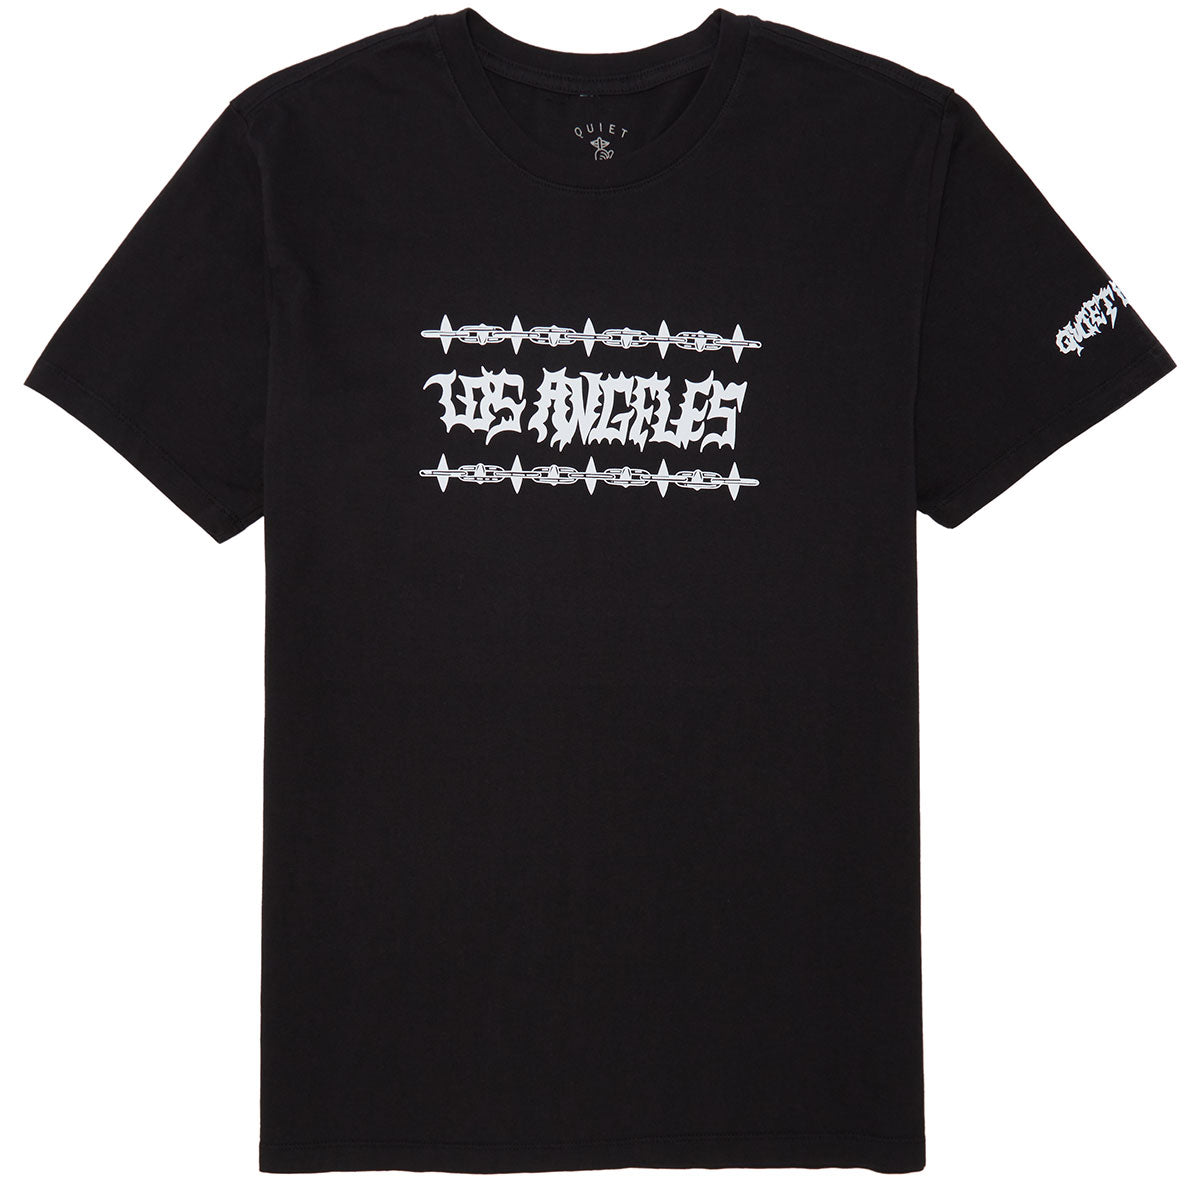 The Quiet Life x Jay Howell LA Organic Premium T-Shirt - Black image 1